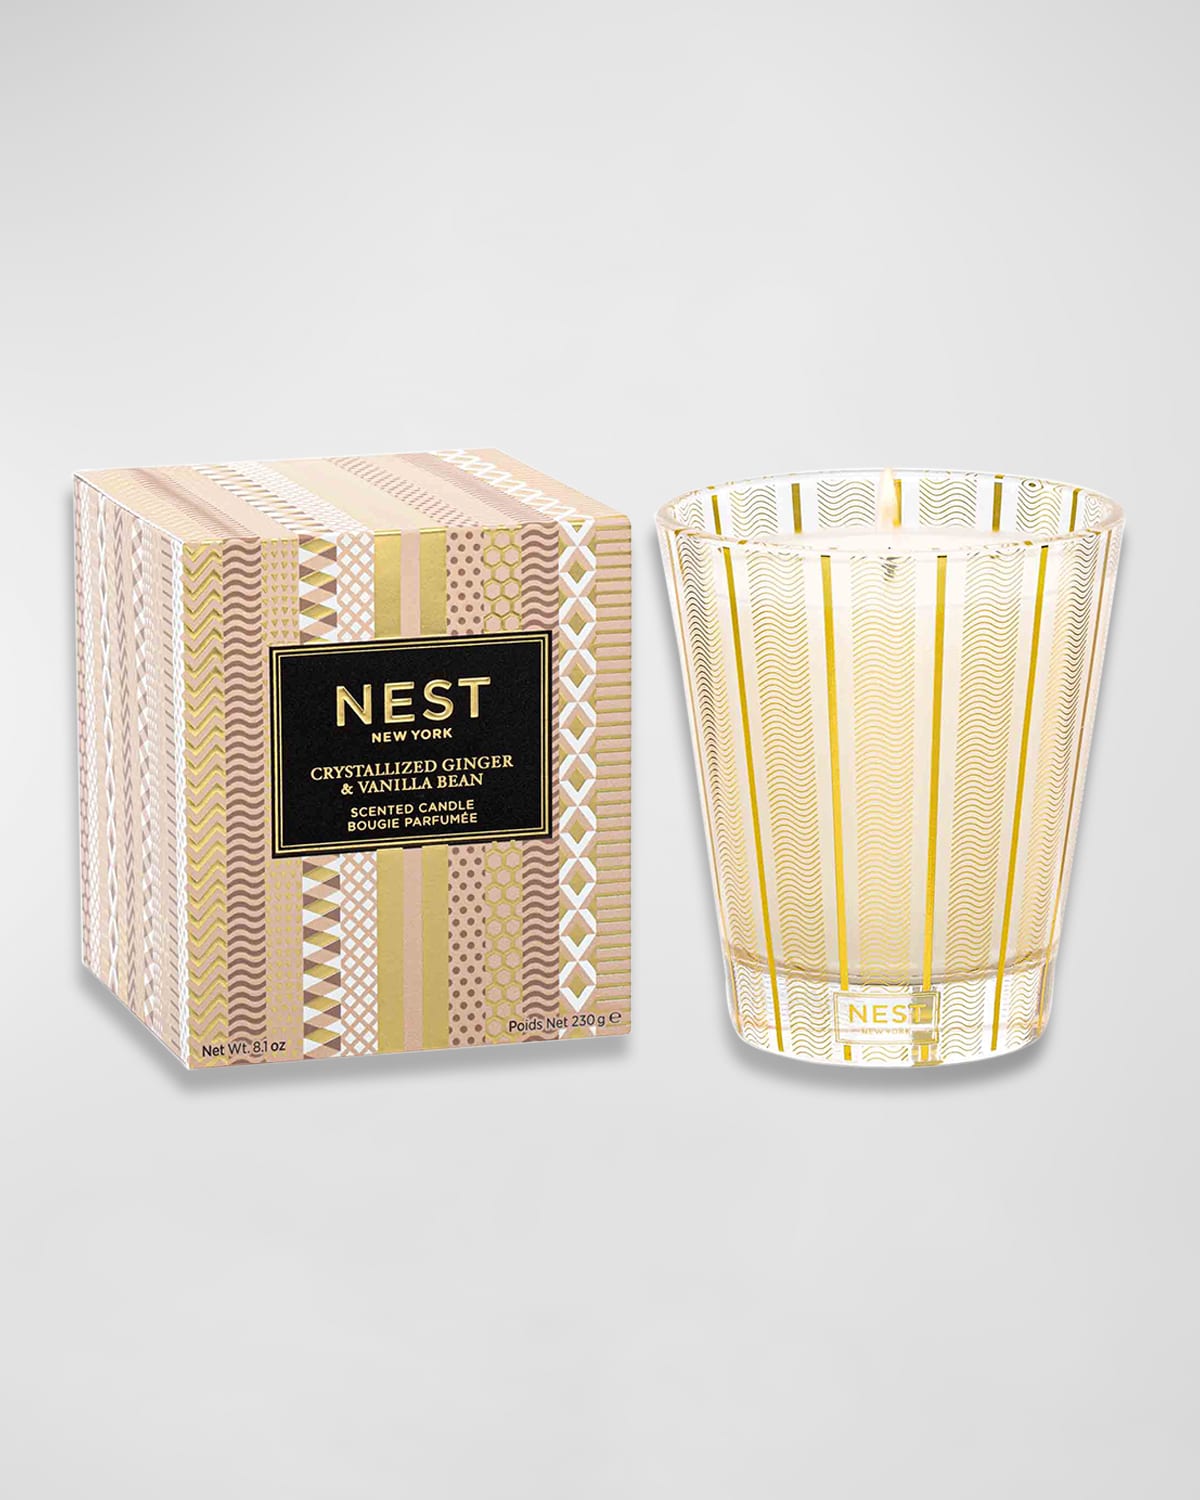 Nest New York 8.1 Oz. Crystallized Ginger & Vanilla Bean Classic Candle